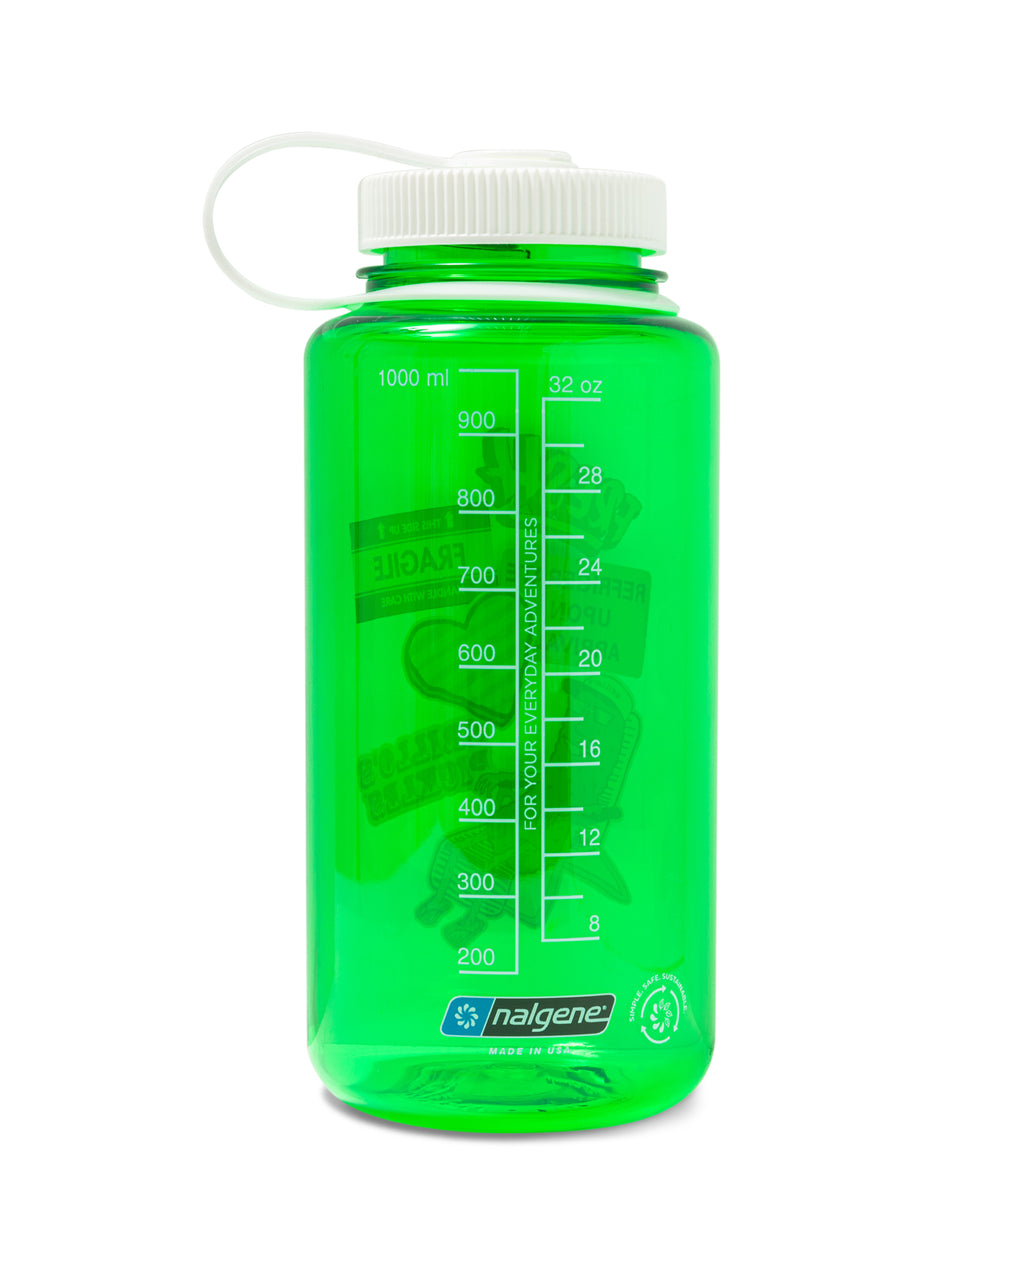 Sticker Bomb 32oz Water Bottle – The Trini Gee